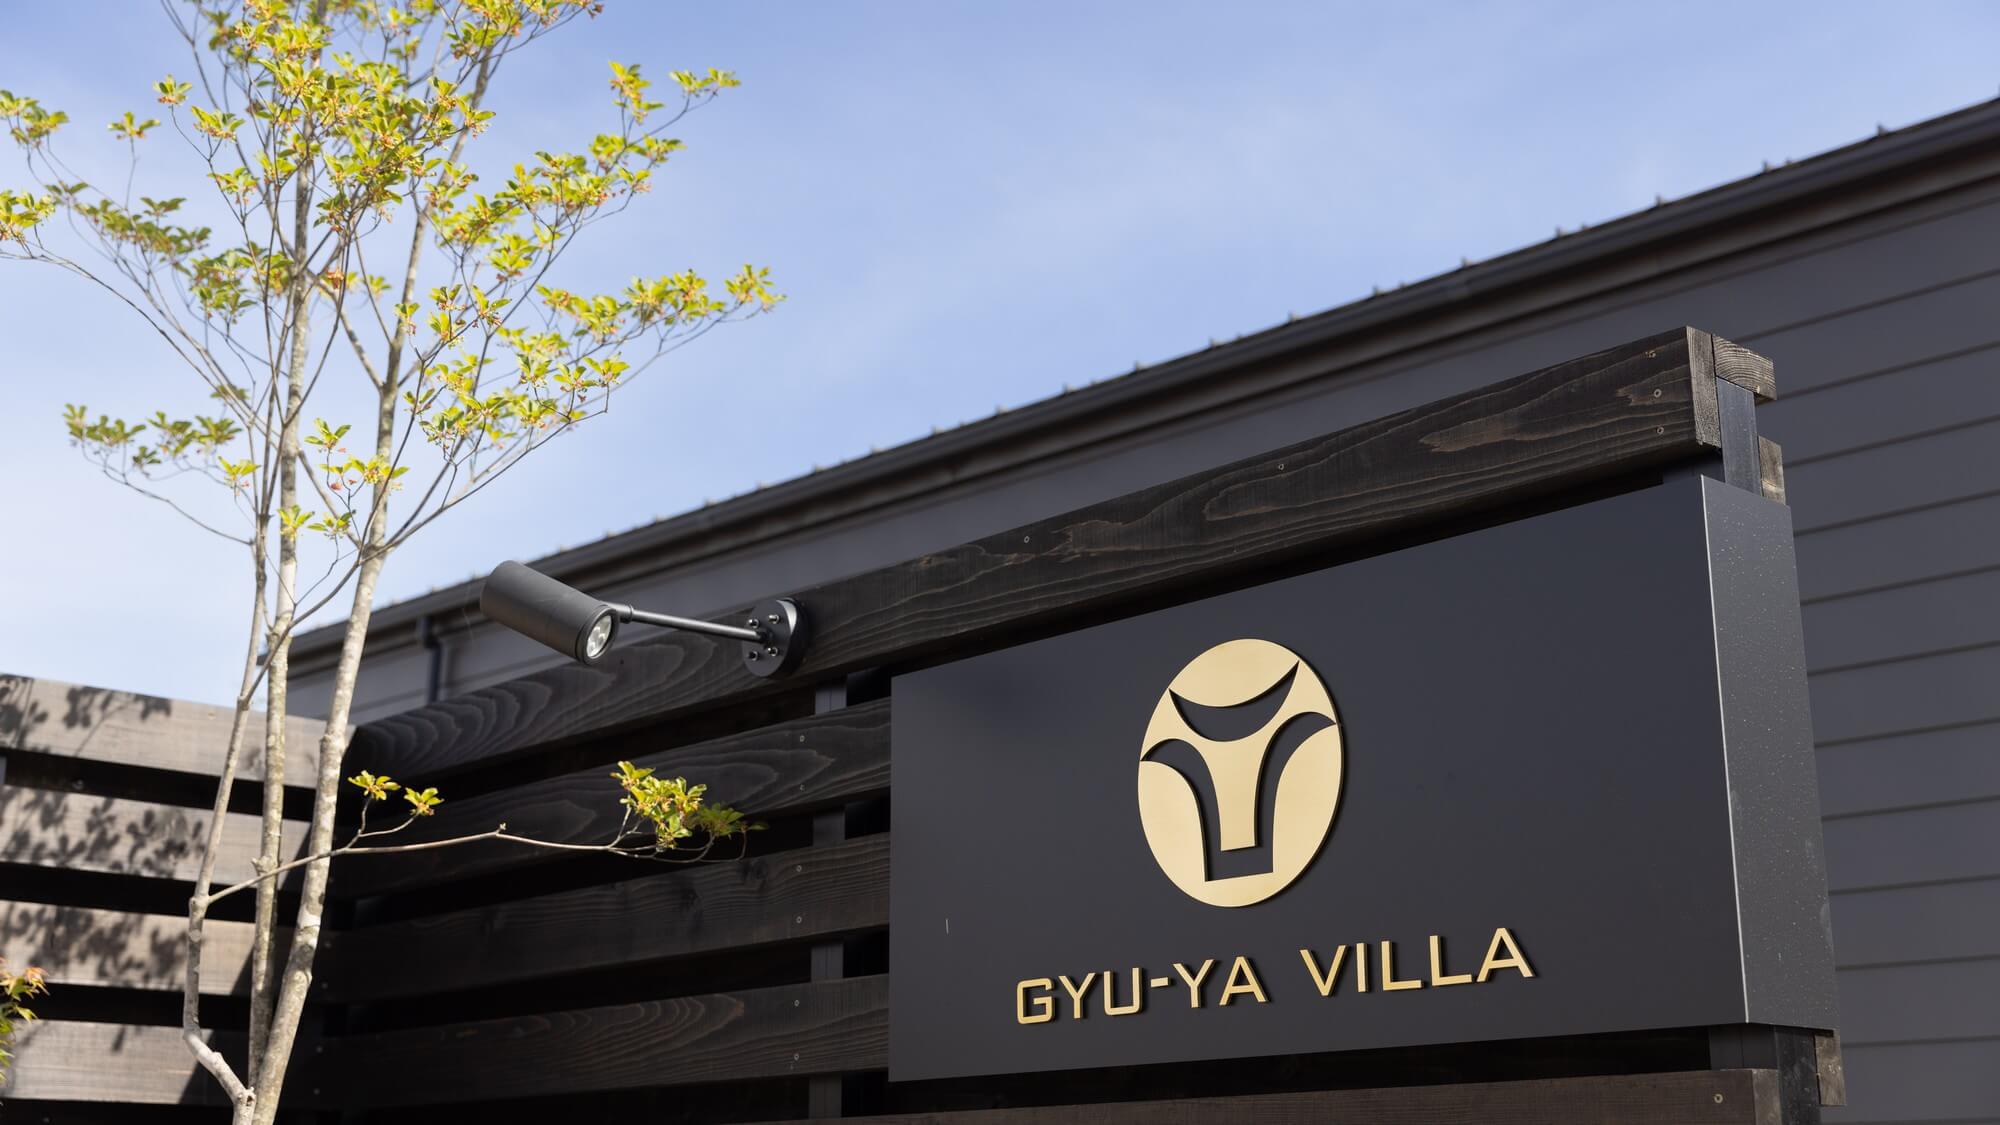 【GYU-YA VILLA】本格フィンランド式サウナを備えたプライベートヴィラ